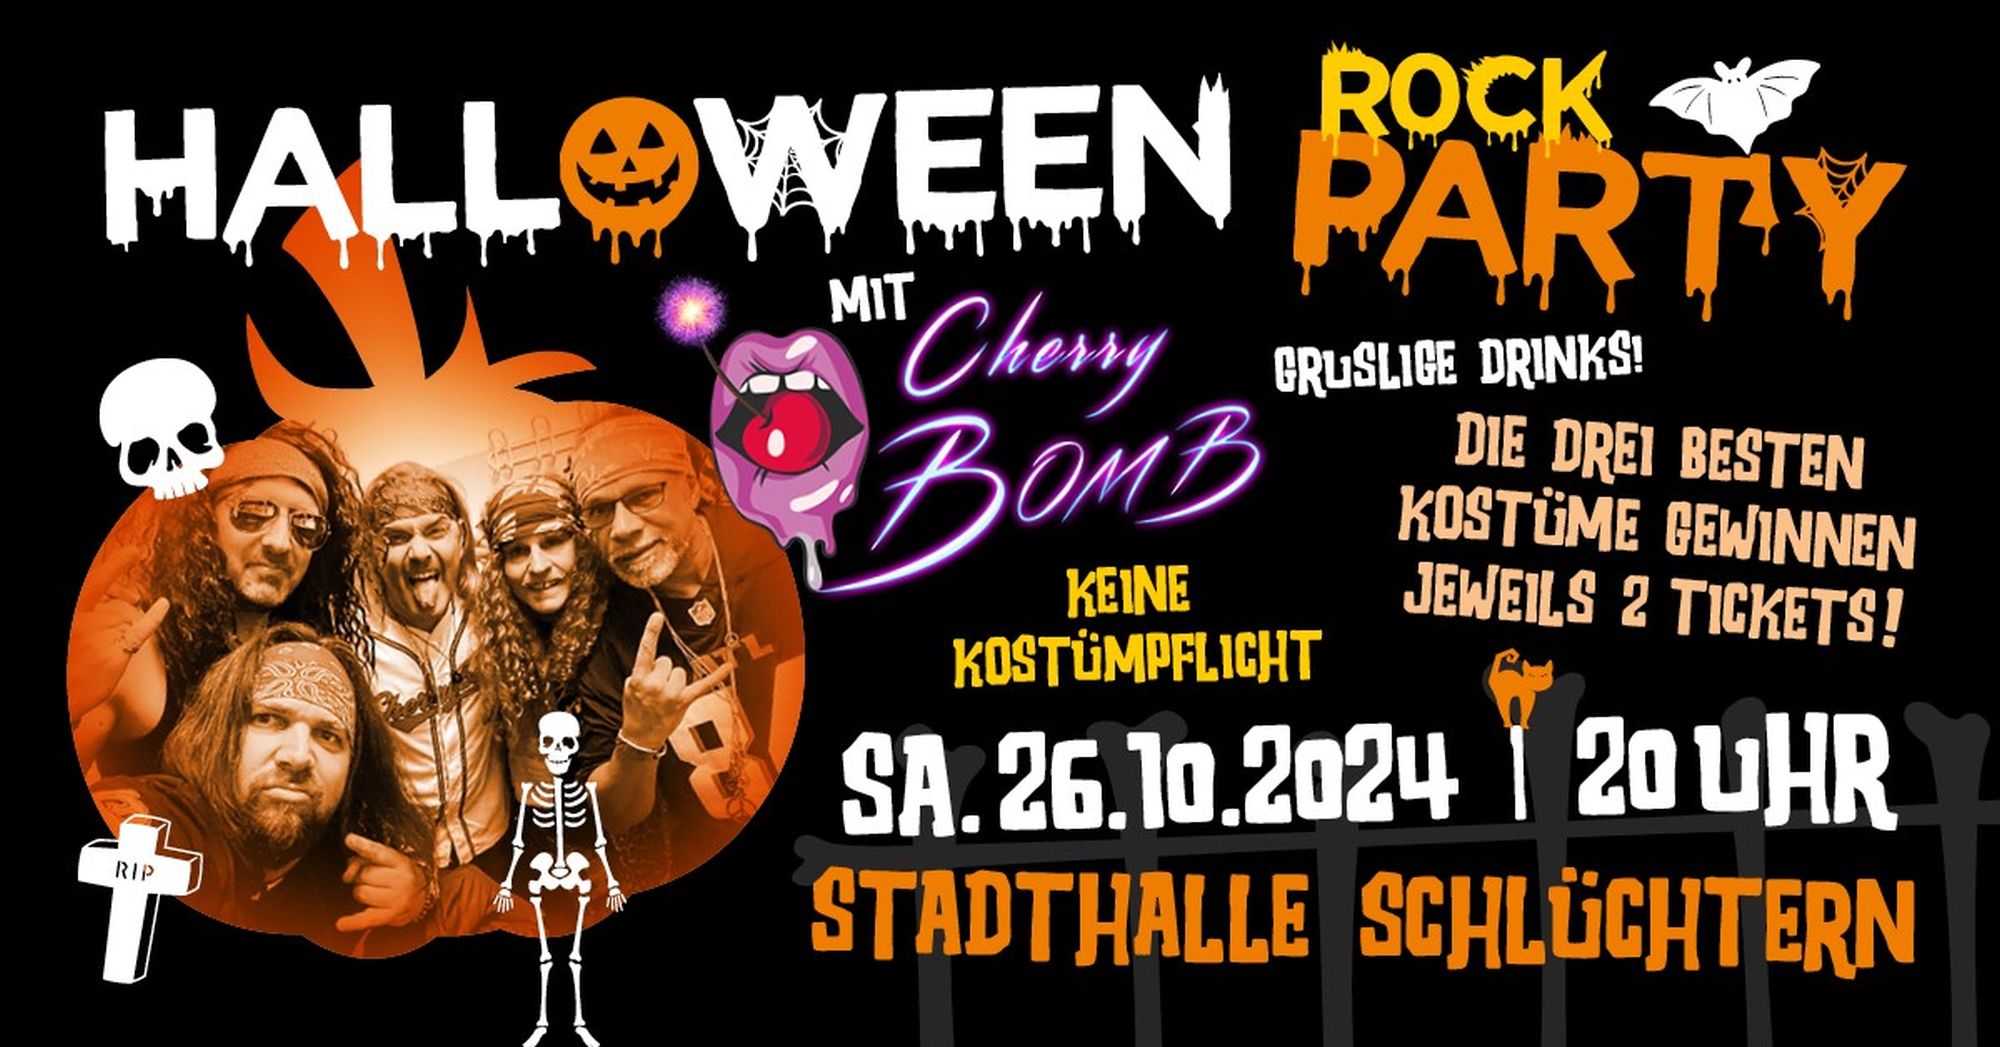 CHERRY BOMB - Halloween Rock Party